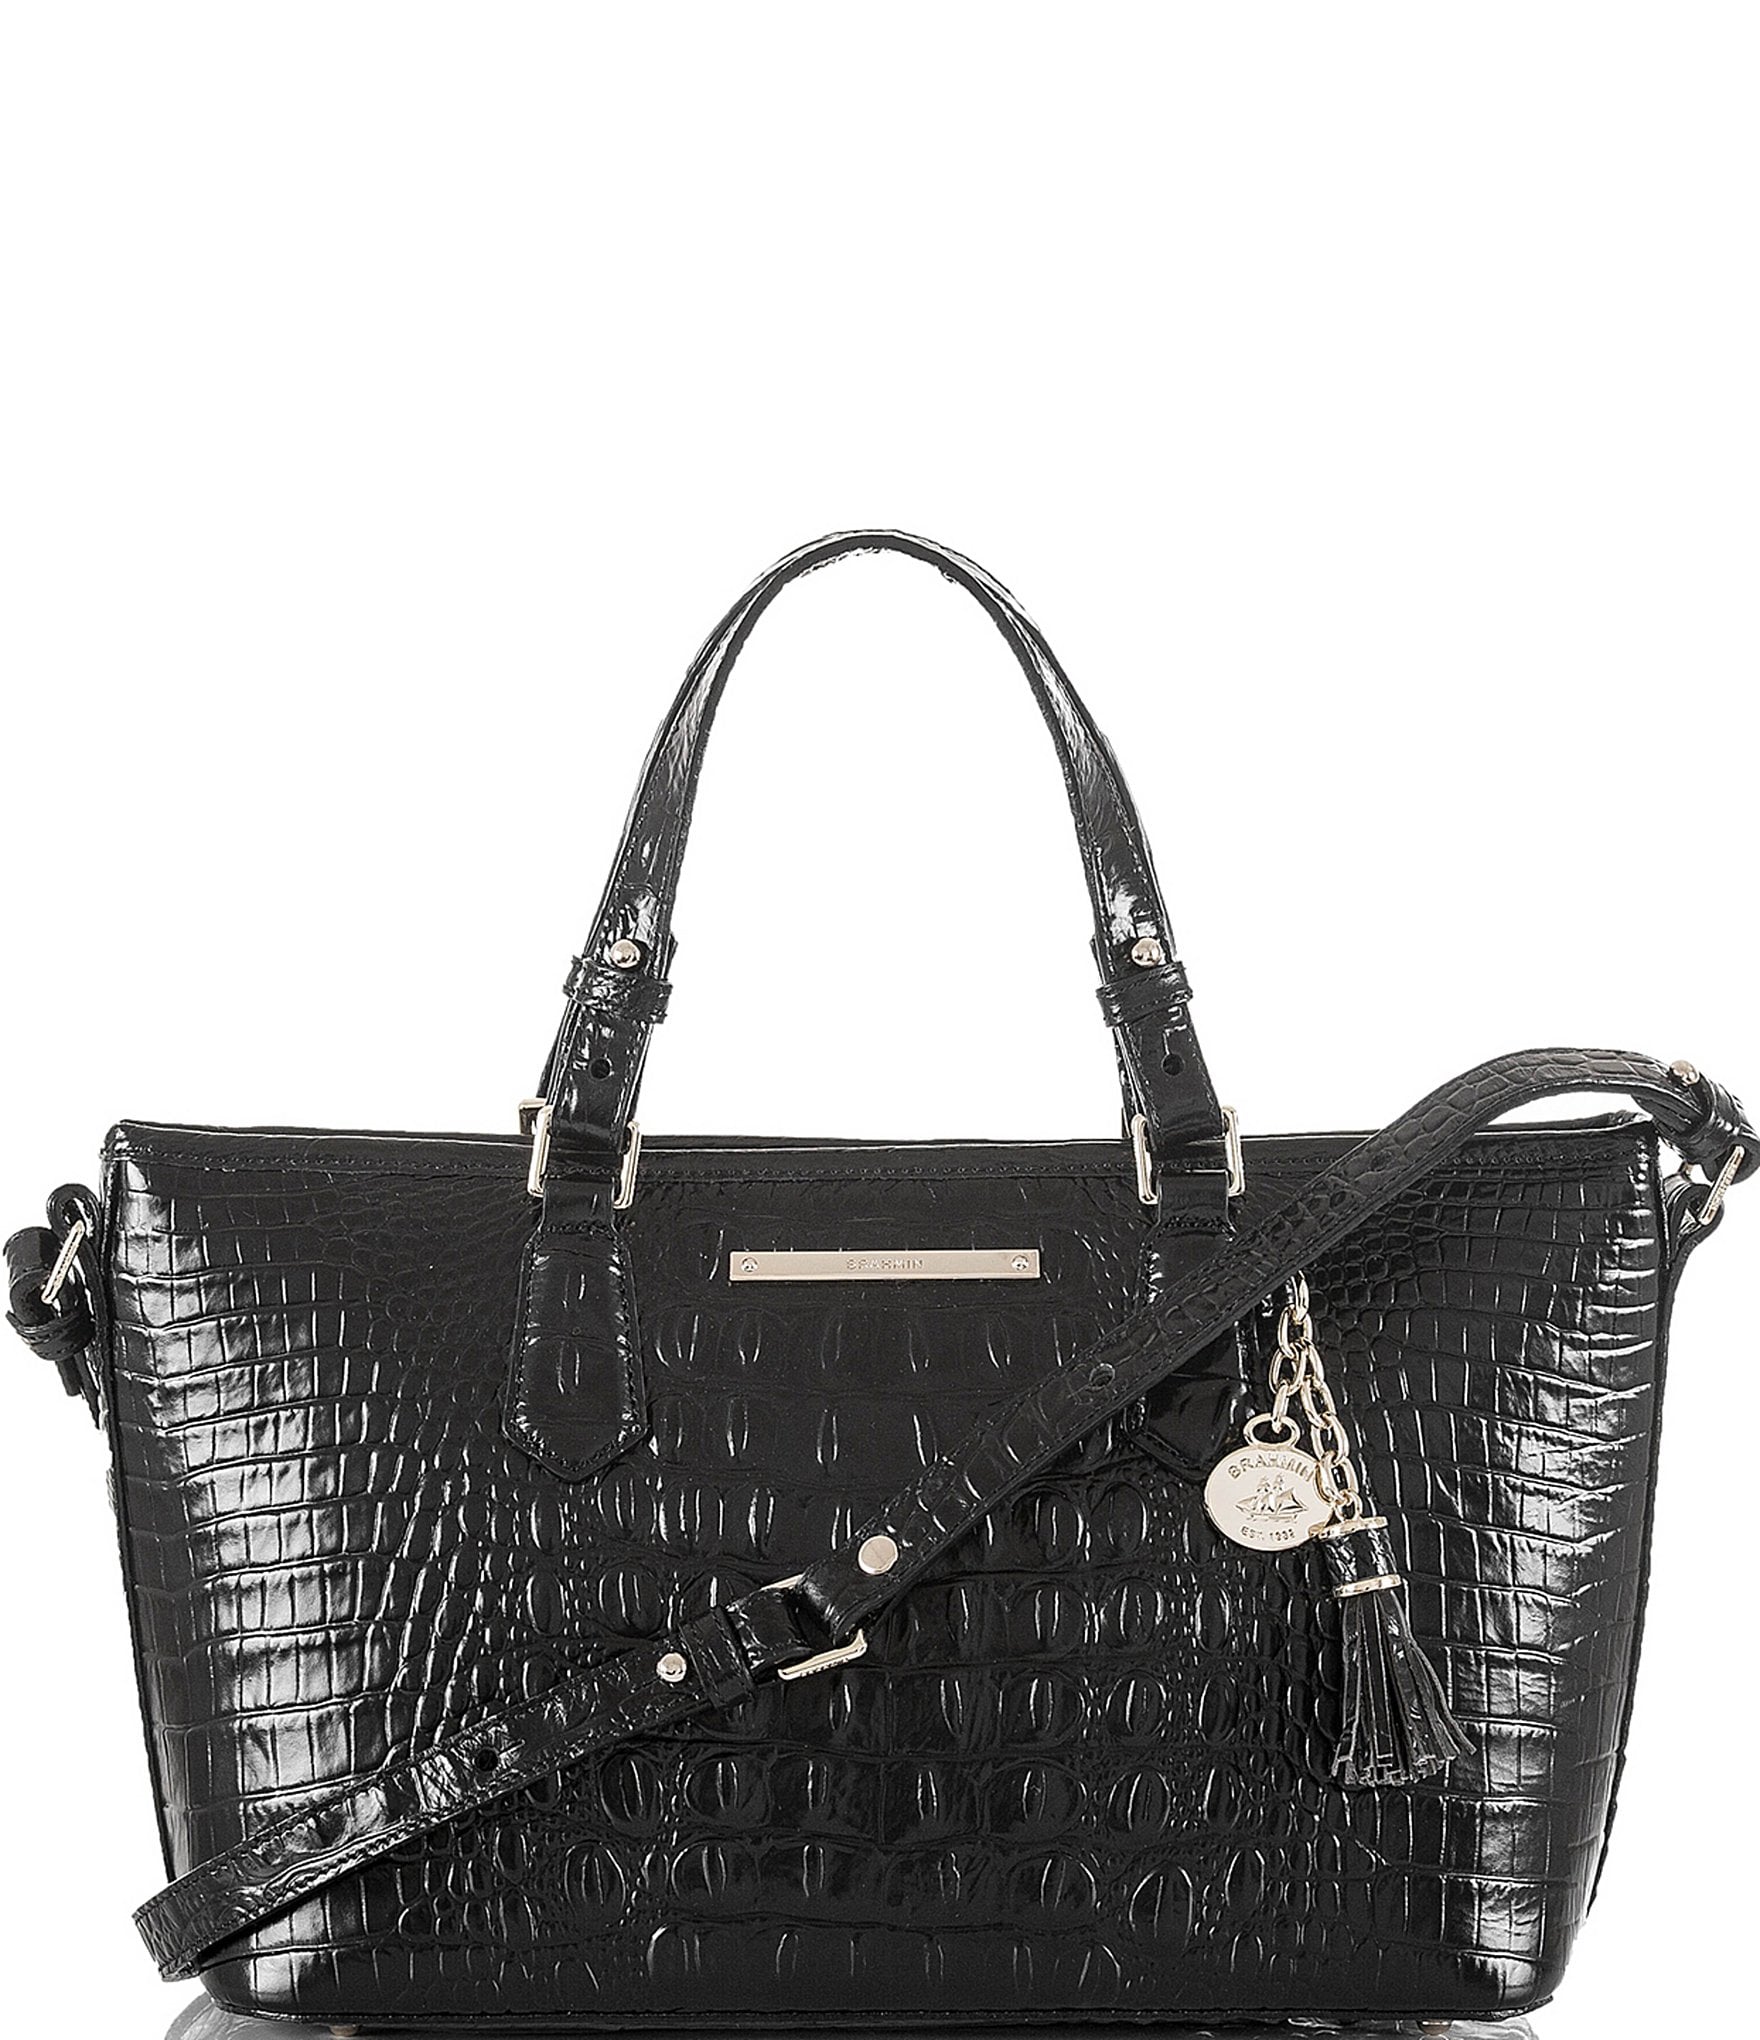 Priscilla Satchel Chocolate Brava | Brahmin | Brahmin handbags, Fashion  handbags, Purses and handbags